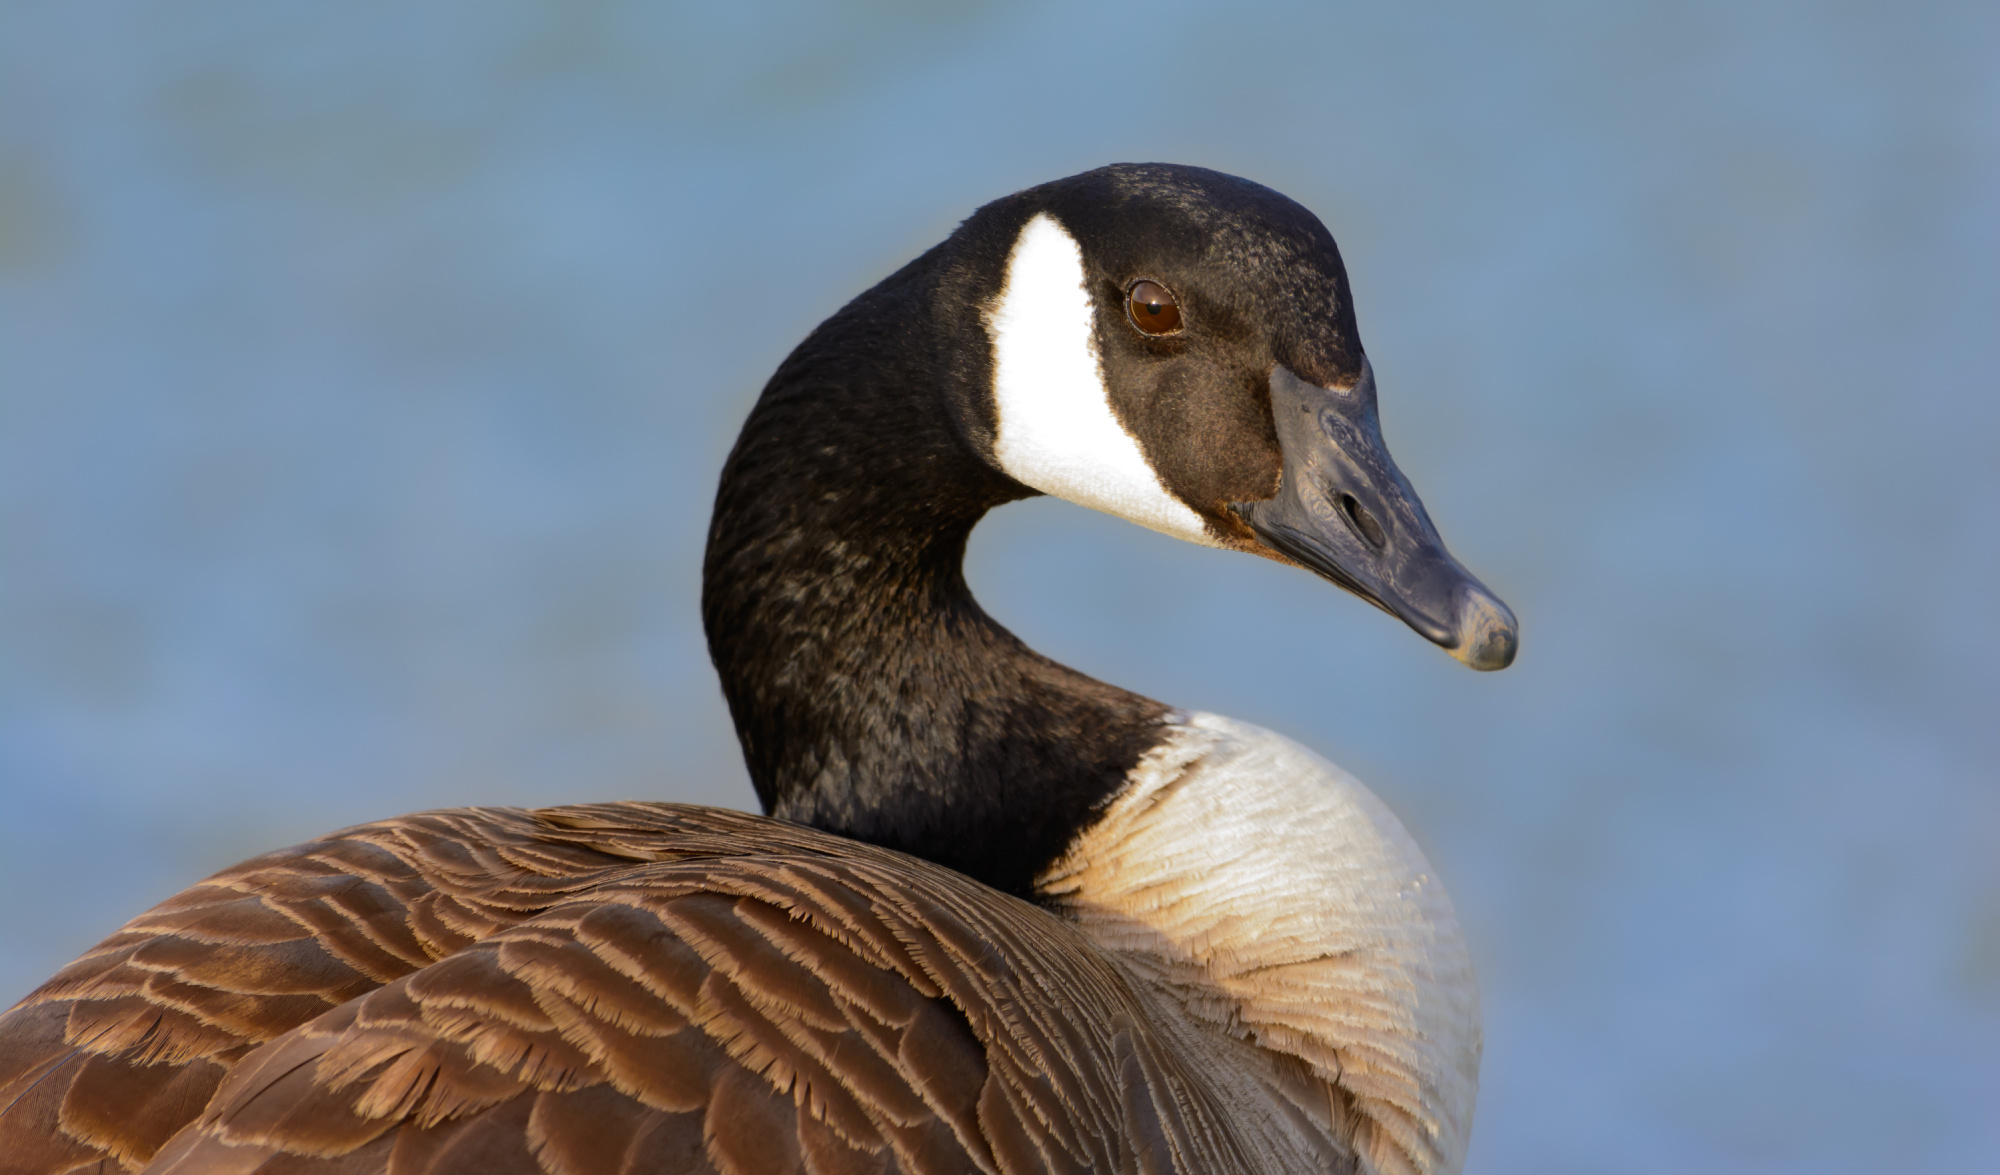 A Canada goose stares at a camera.